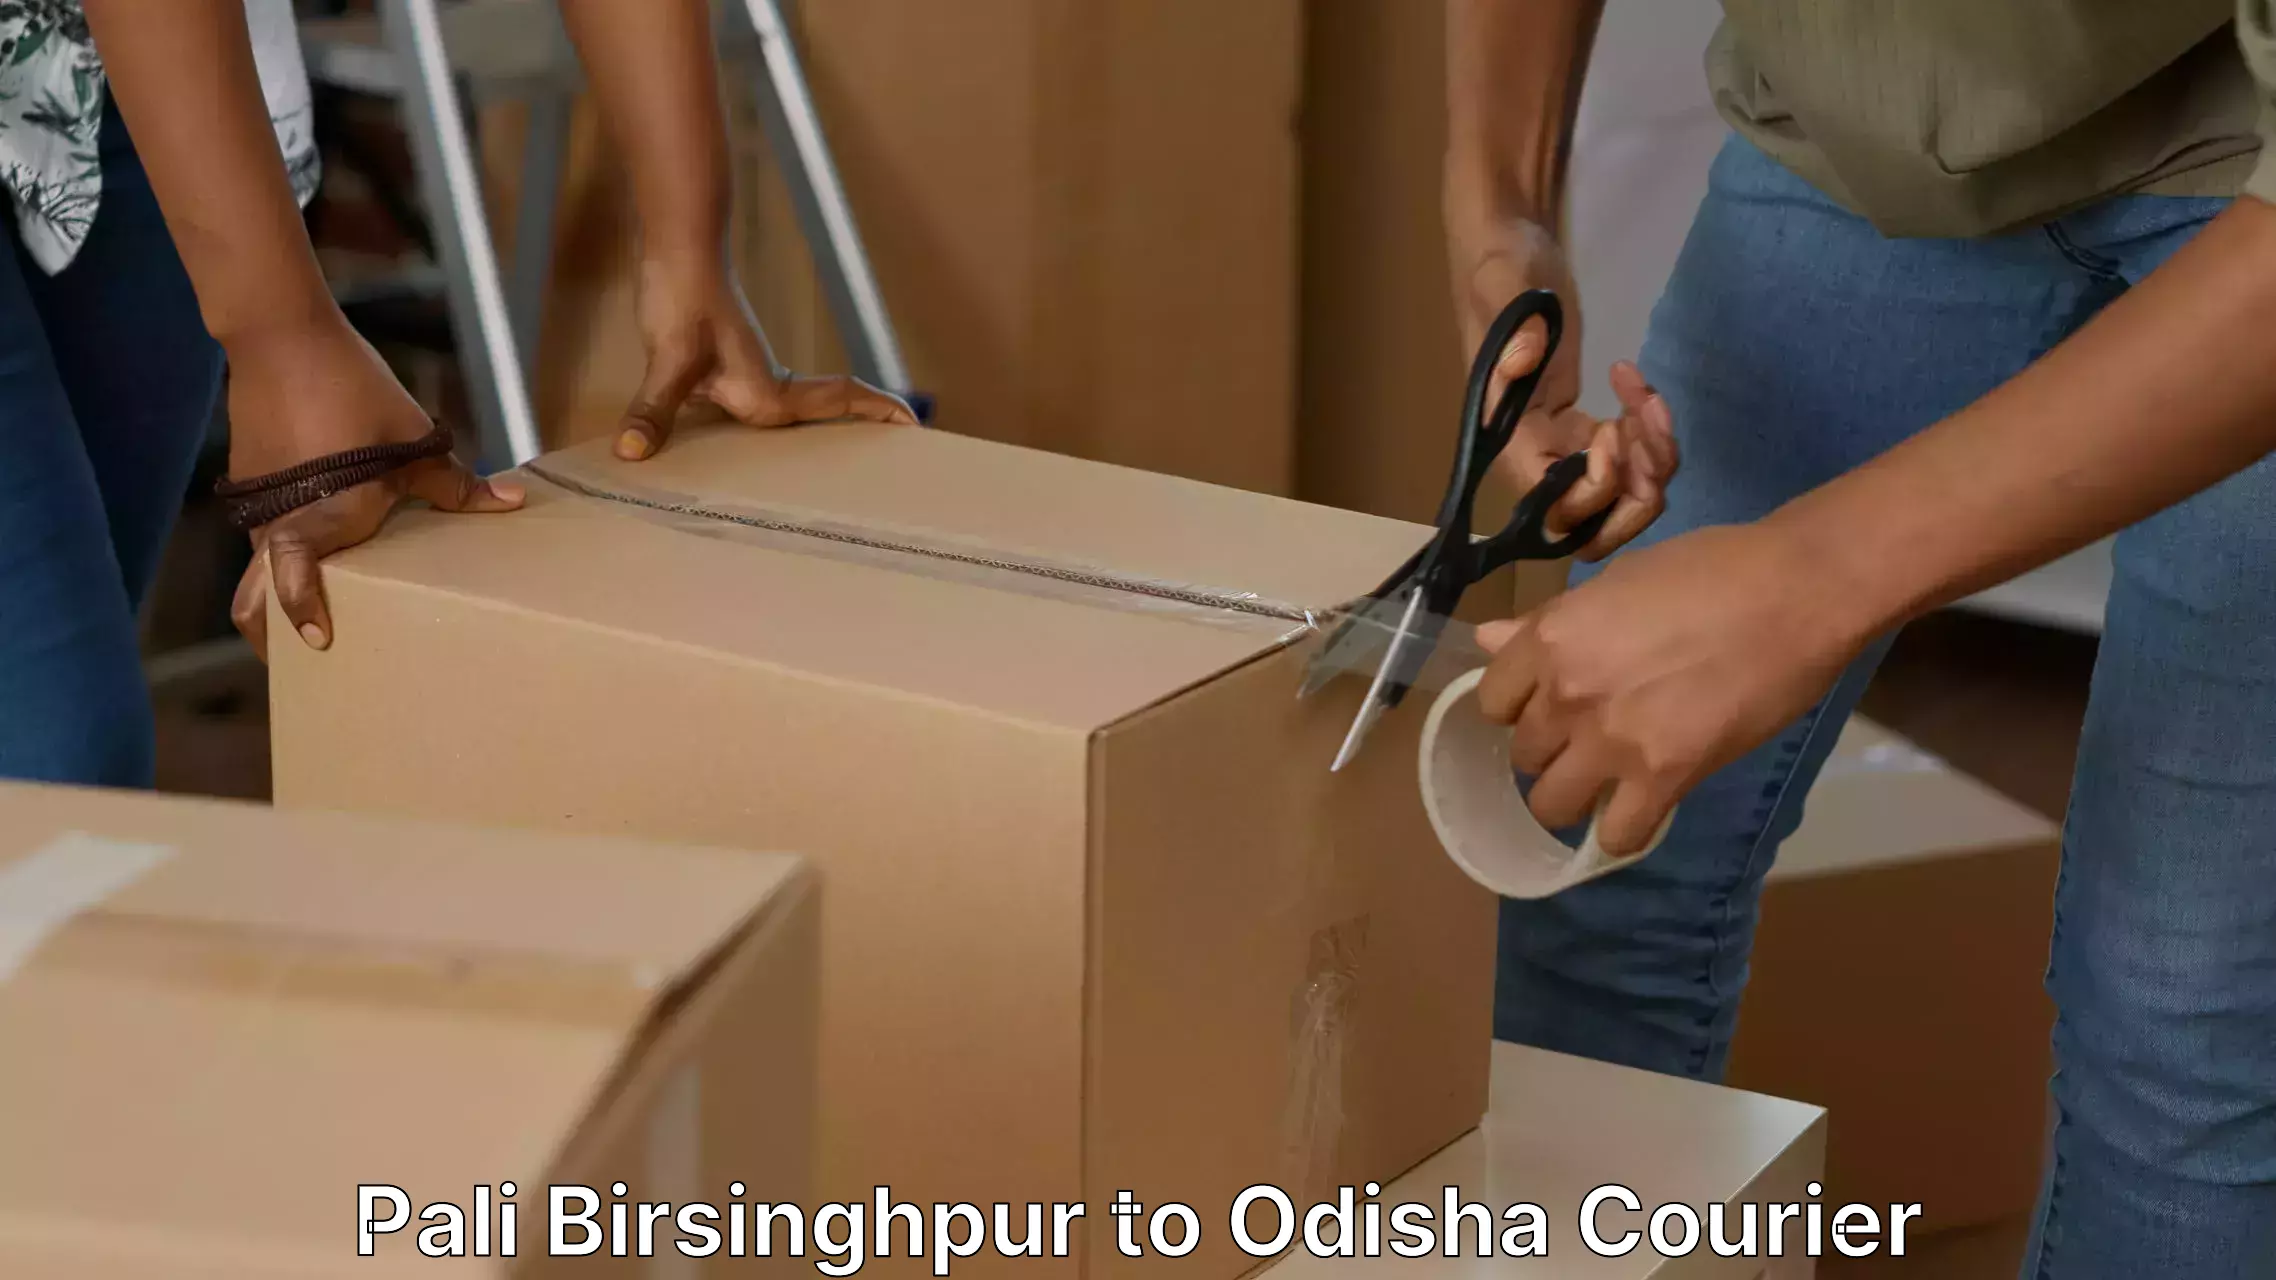 Efficient moving company Pali Birsinghpur to Odisha